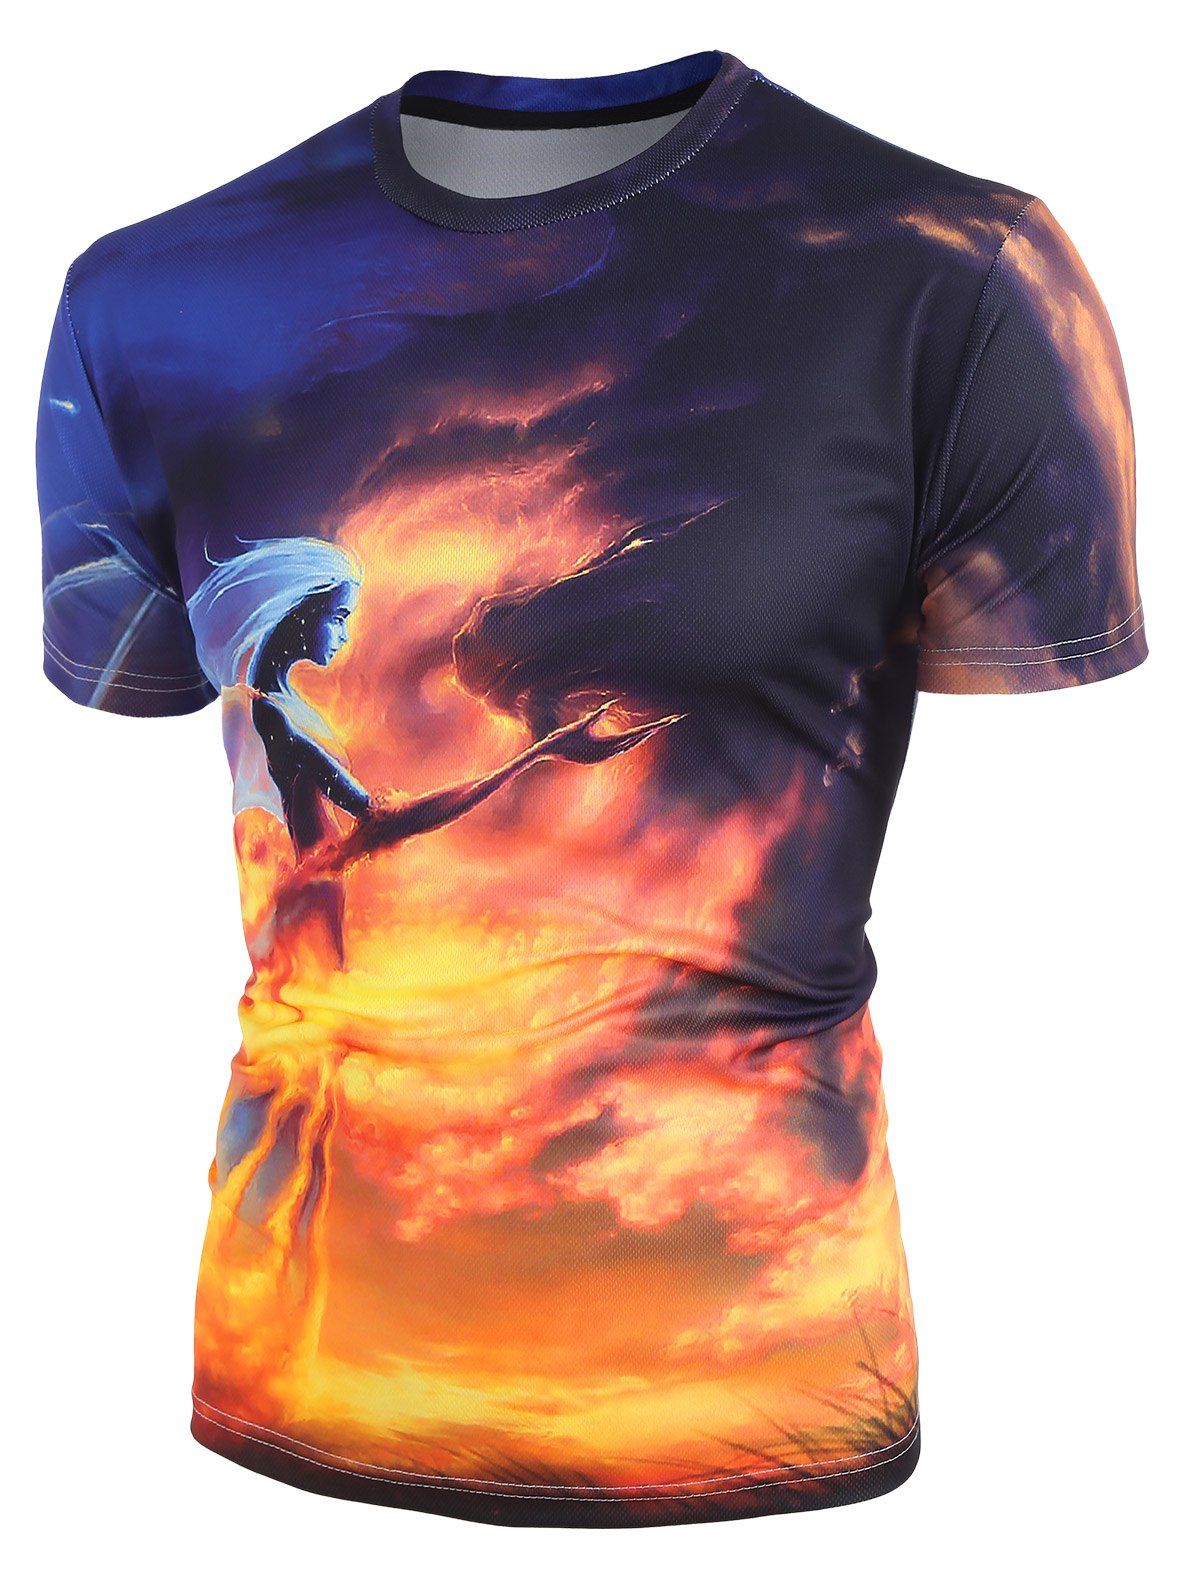 Angel and Devil Print Short Sleeve T-shirt - multicolor 3XL